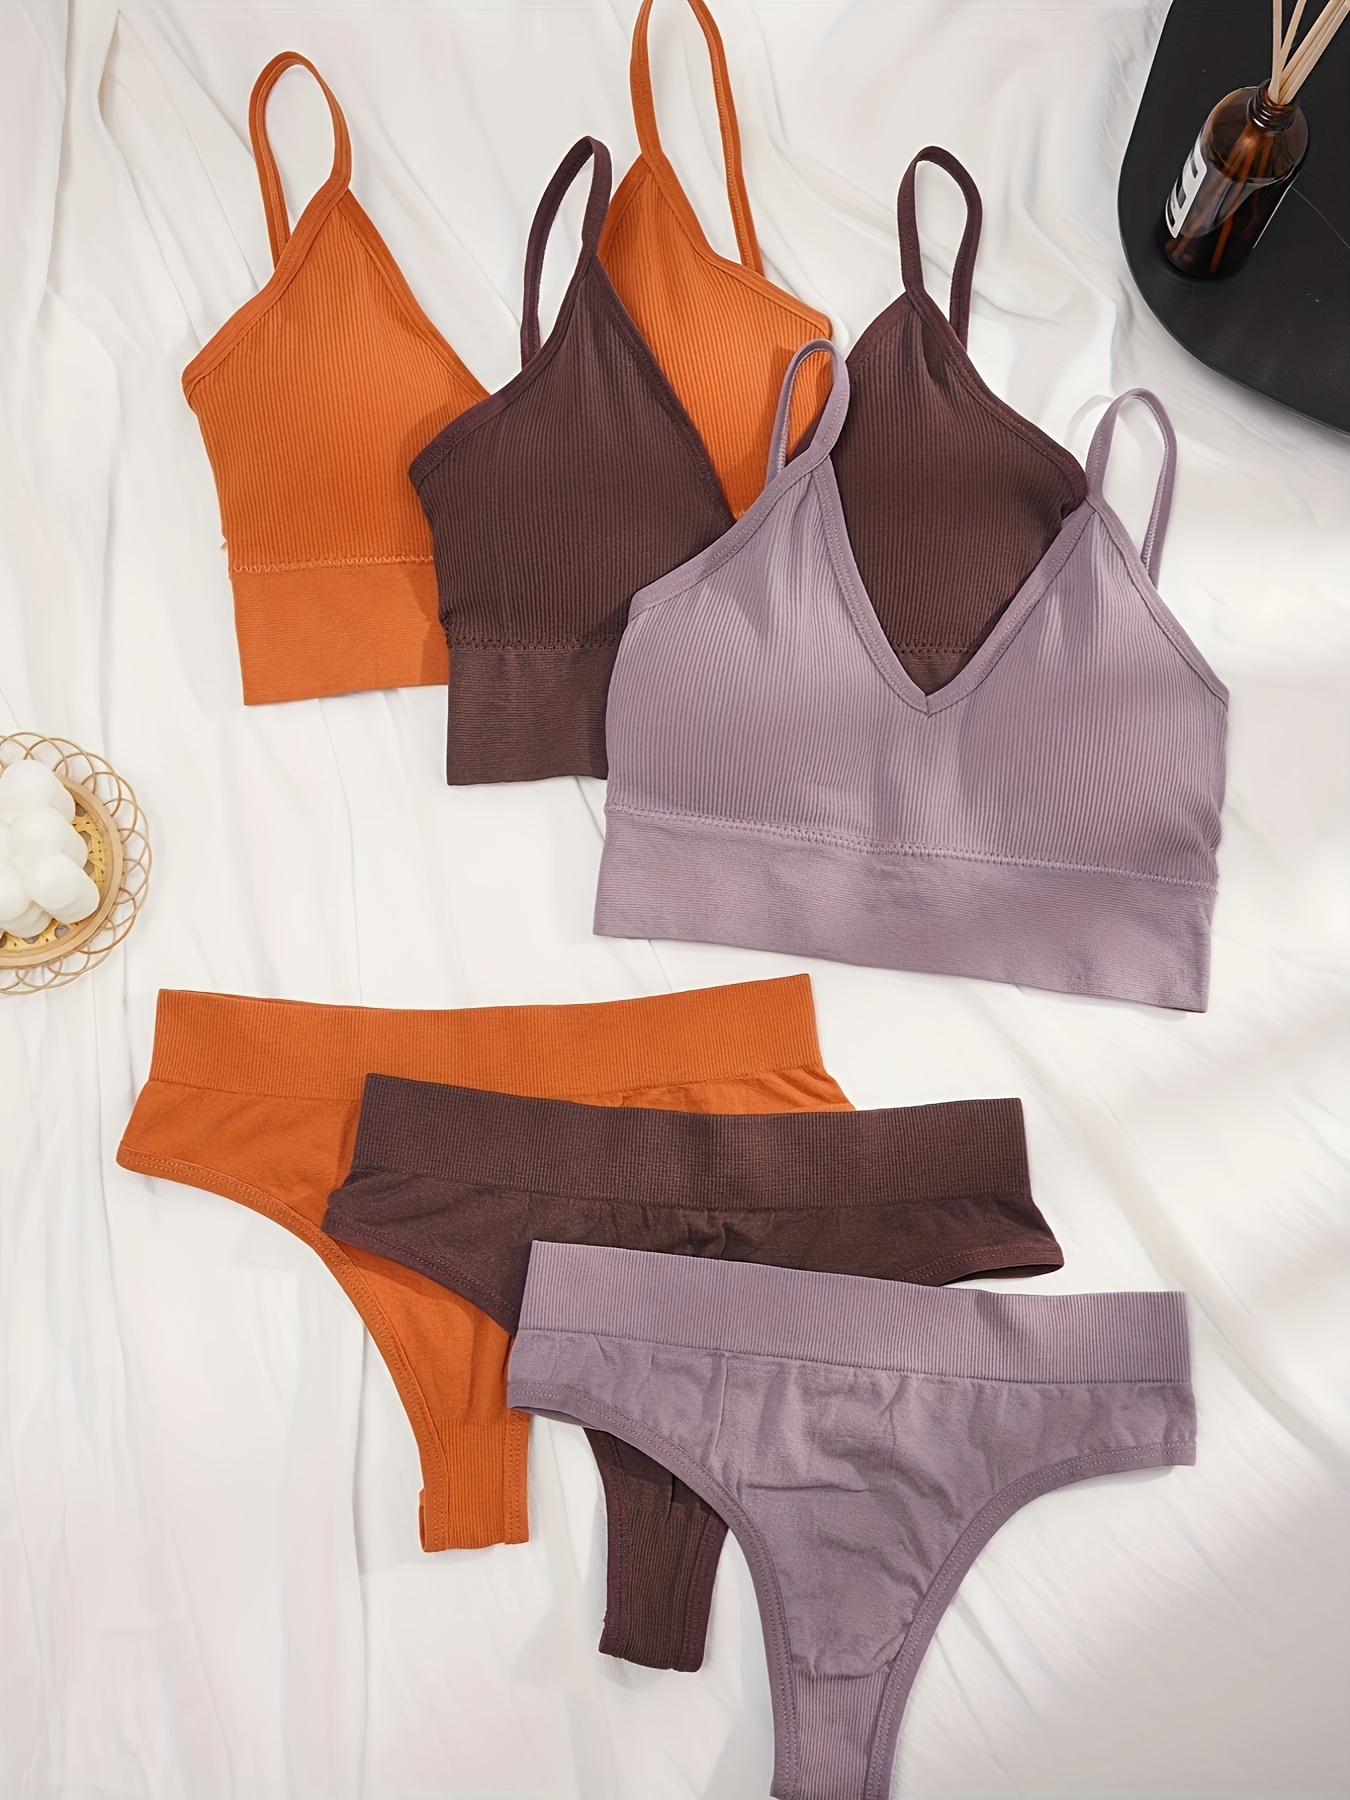 3 Sets Solid Ribbed Bra & Panties, Stretch Wireless Bra & Thong Panties  Lingerie Set, Women's Lingerie & Underwear